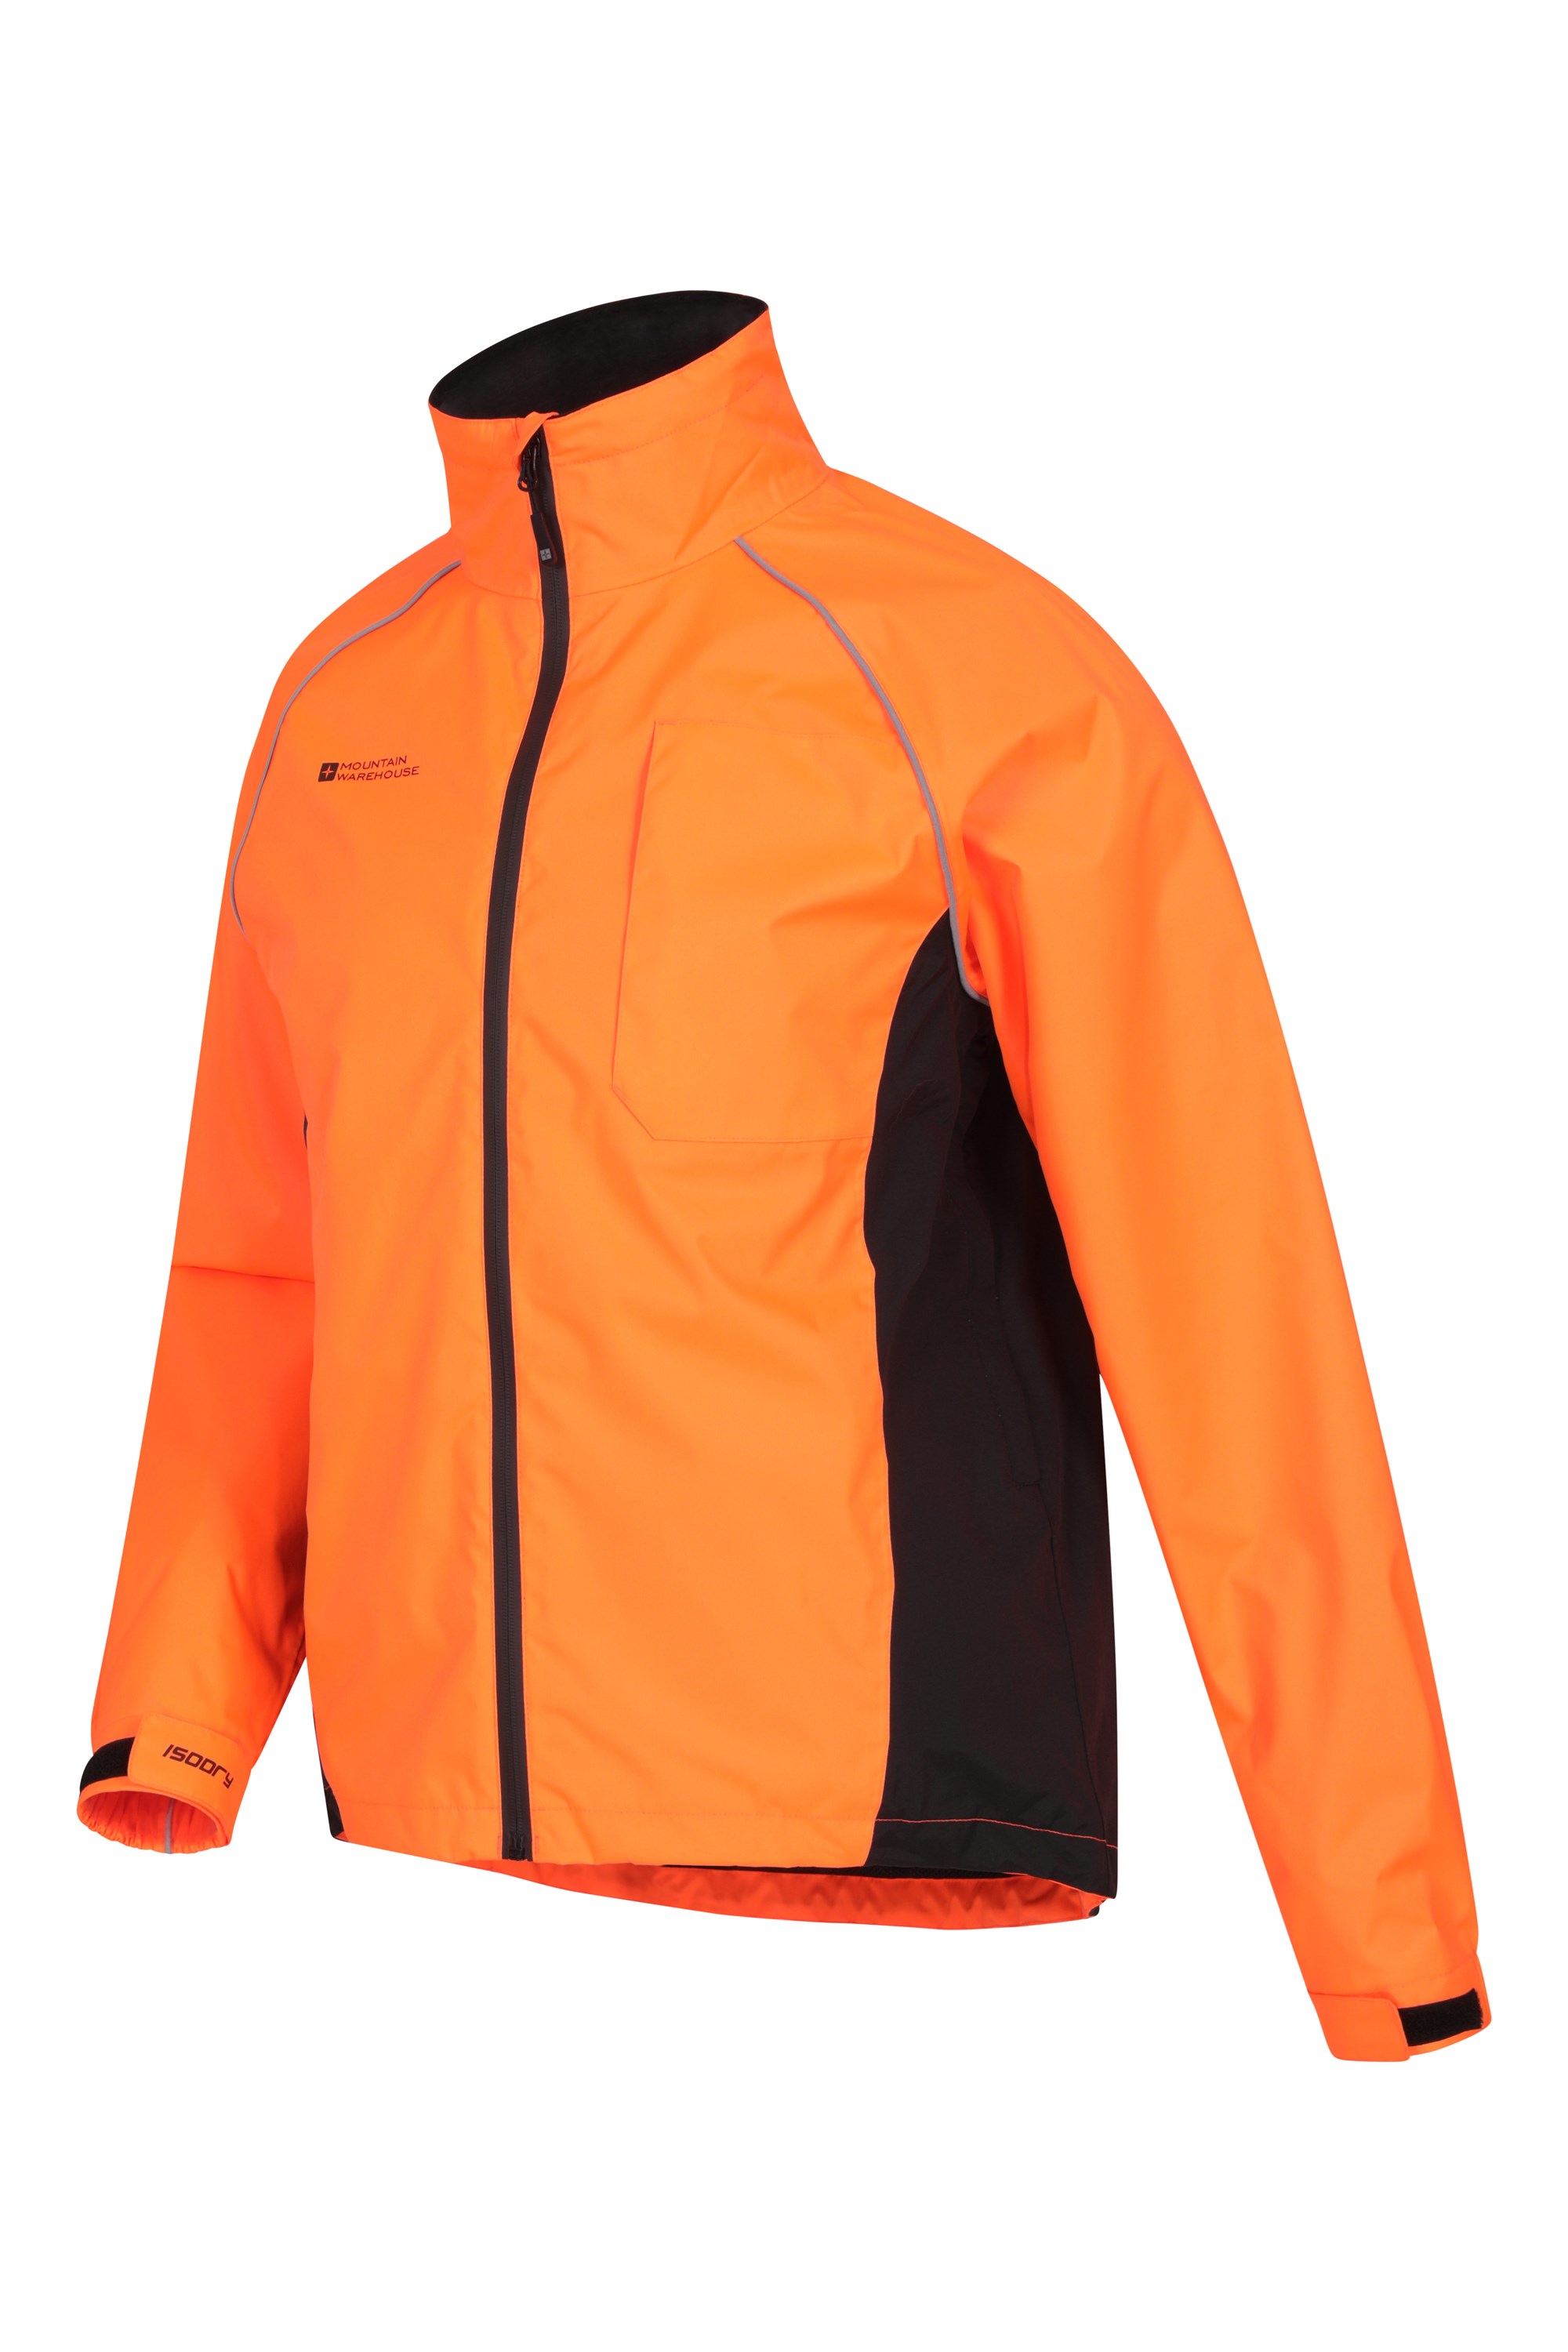 mountain warehouse adrenaline mens high visibility jacket